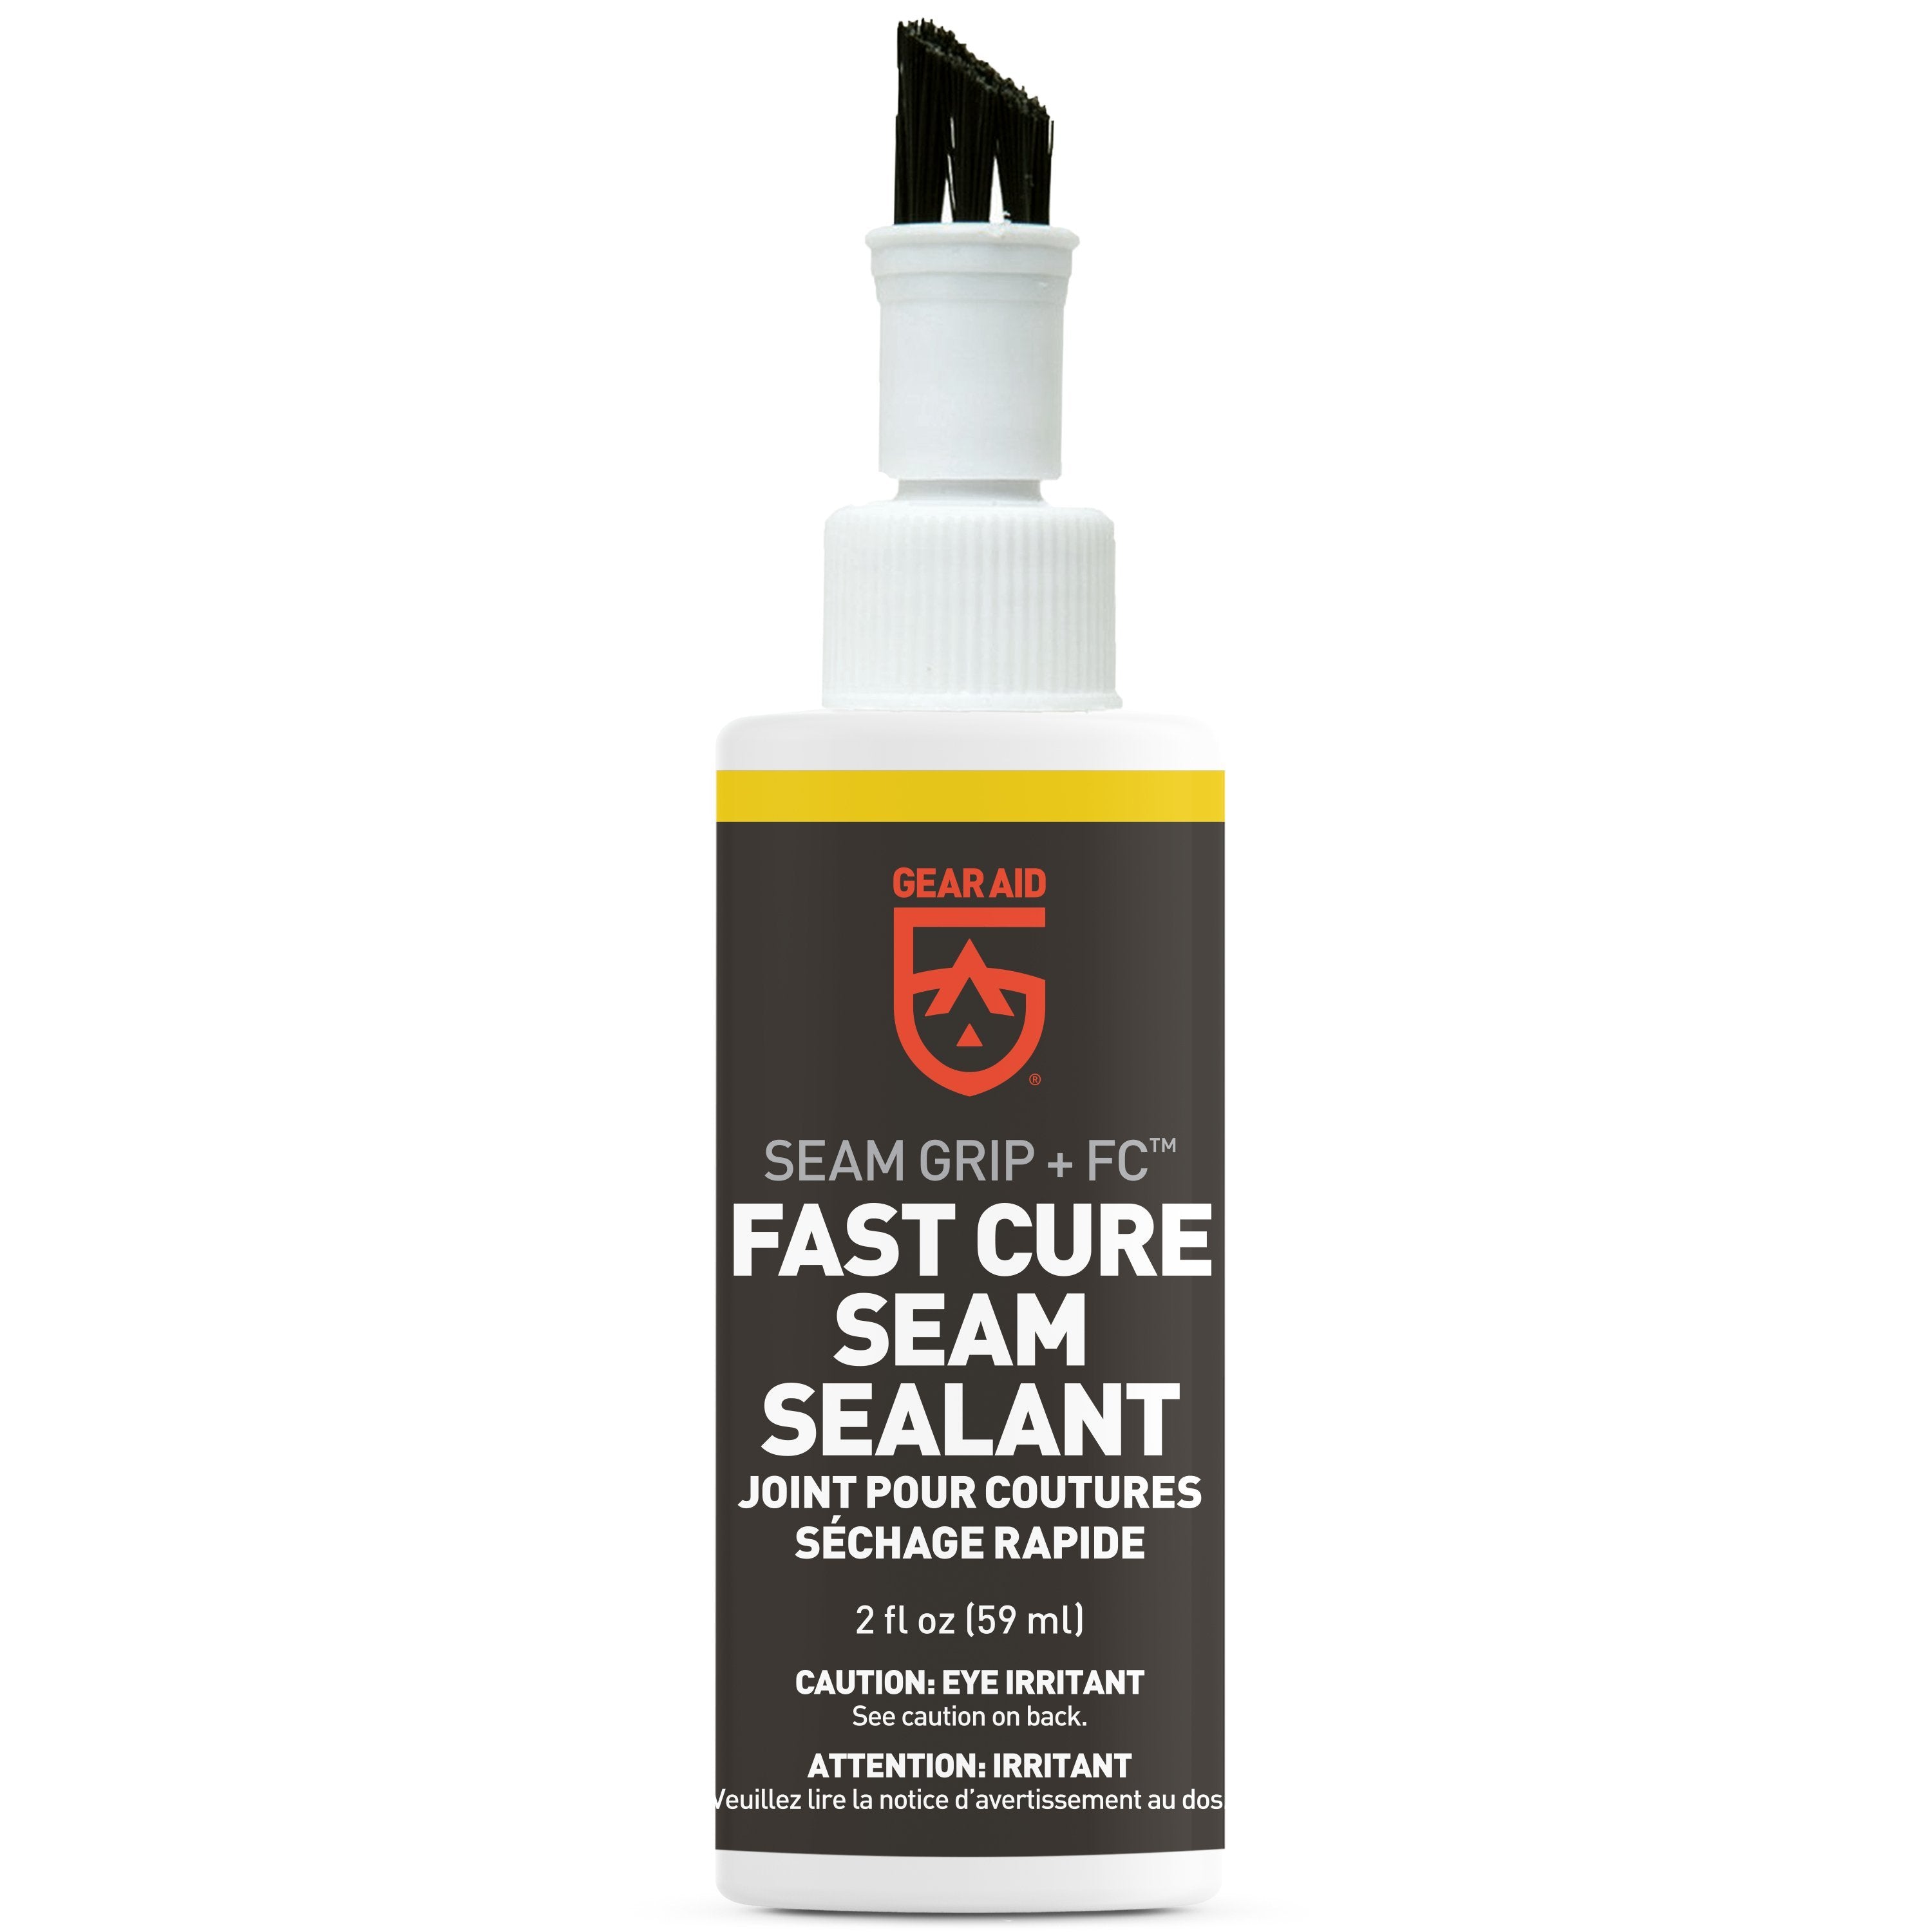 Gear Aid Seam Grip + FC Bottle